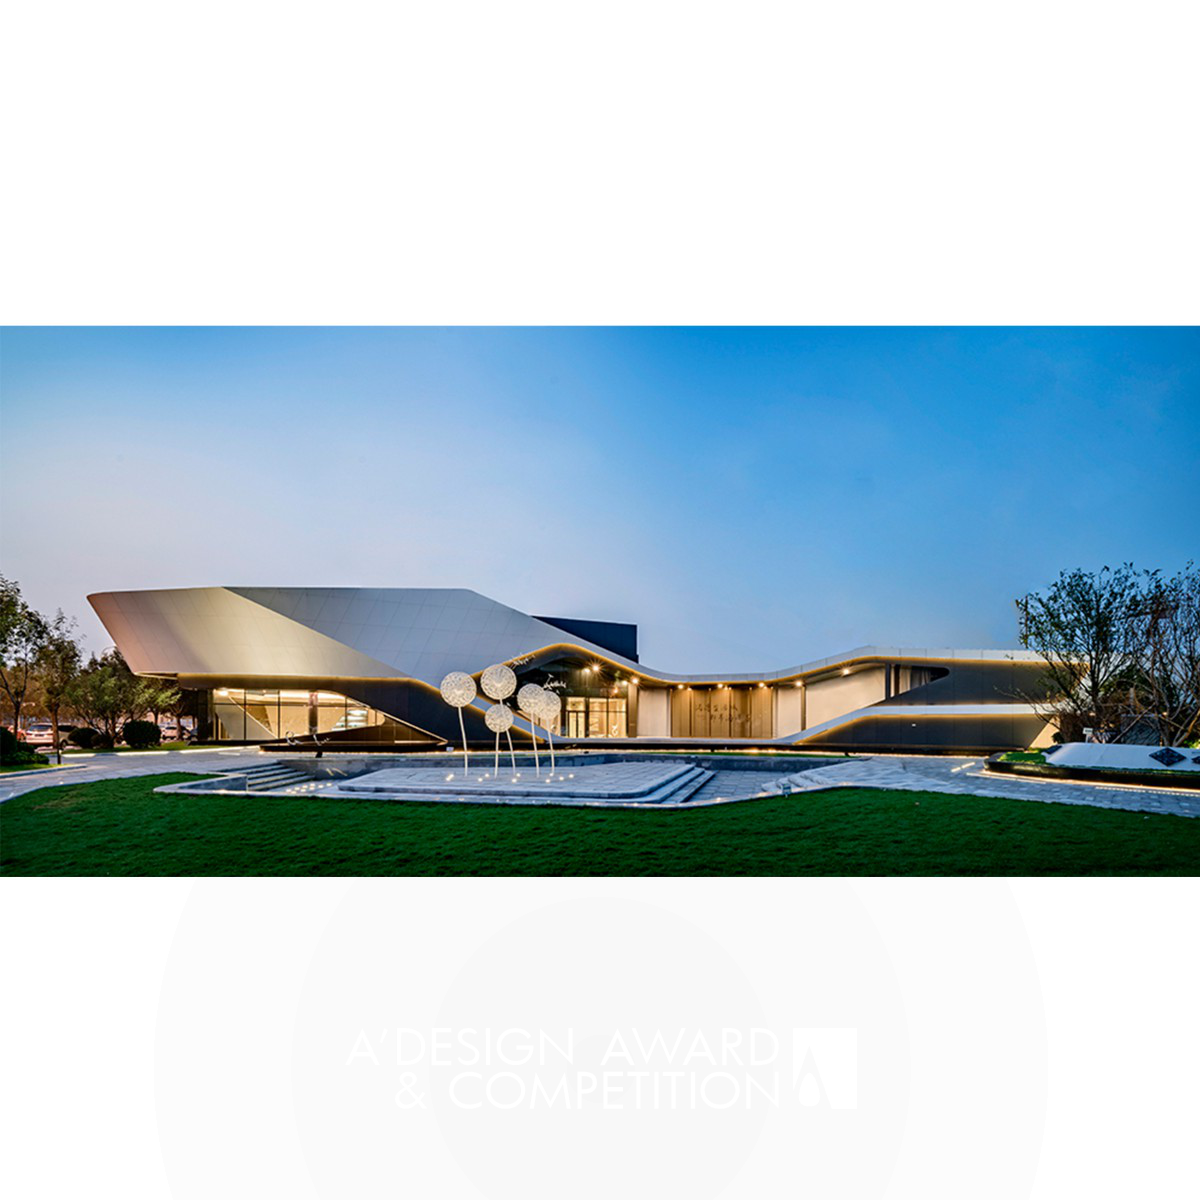 Navigator Sales Center Sales Center by Kris Lin Platinum Architecture, Building and Structure Design Award Winner 2019 